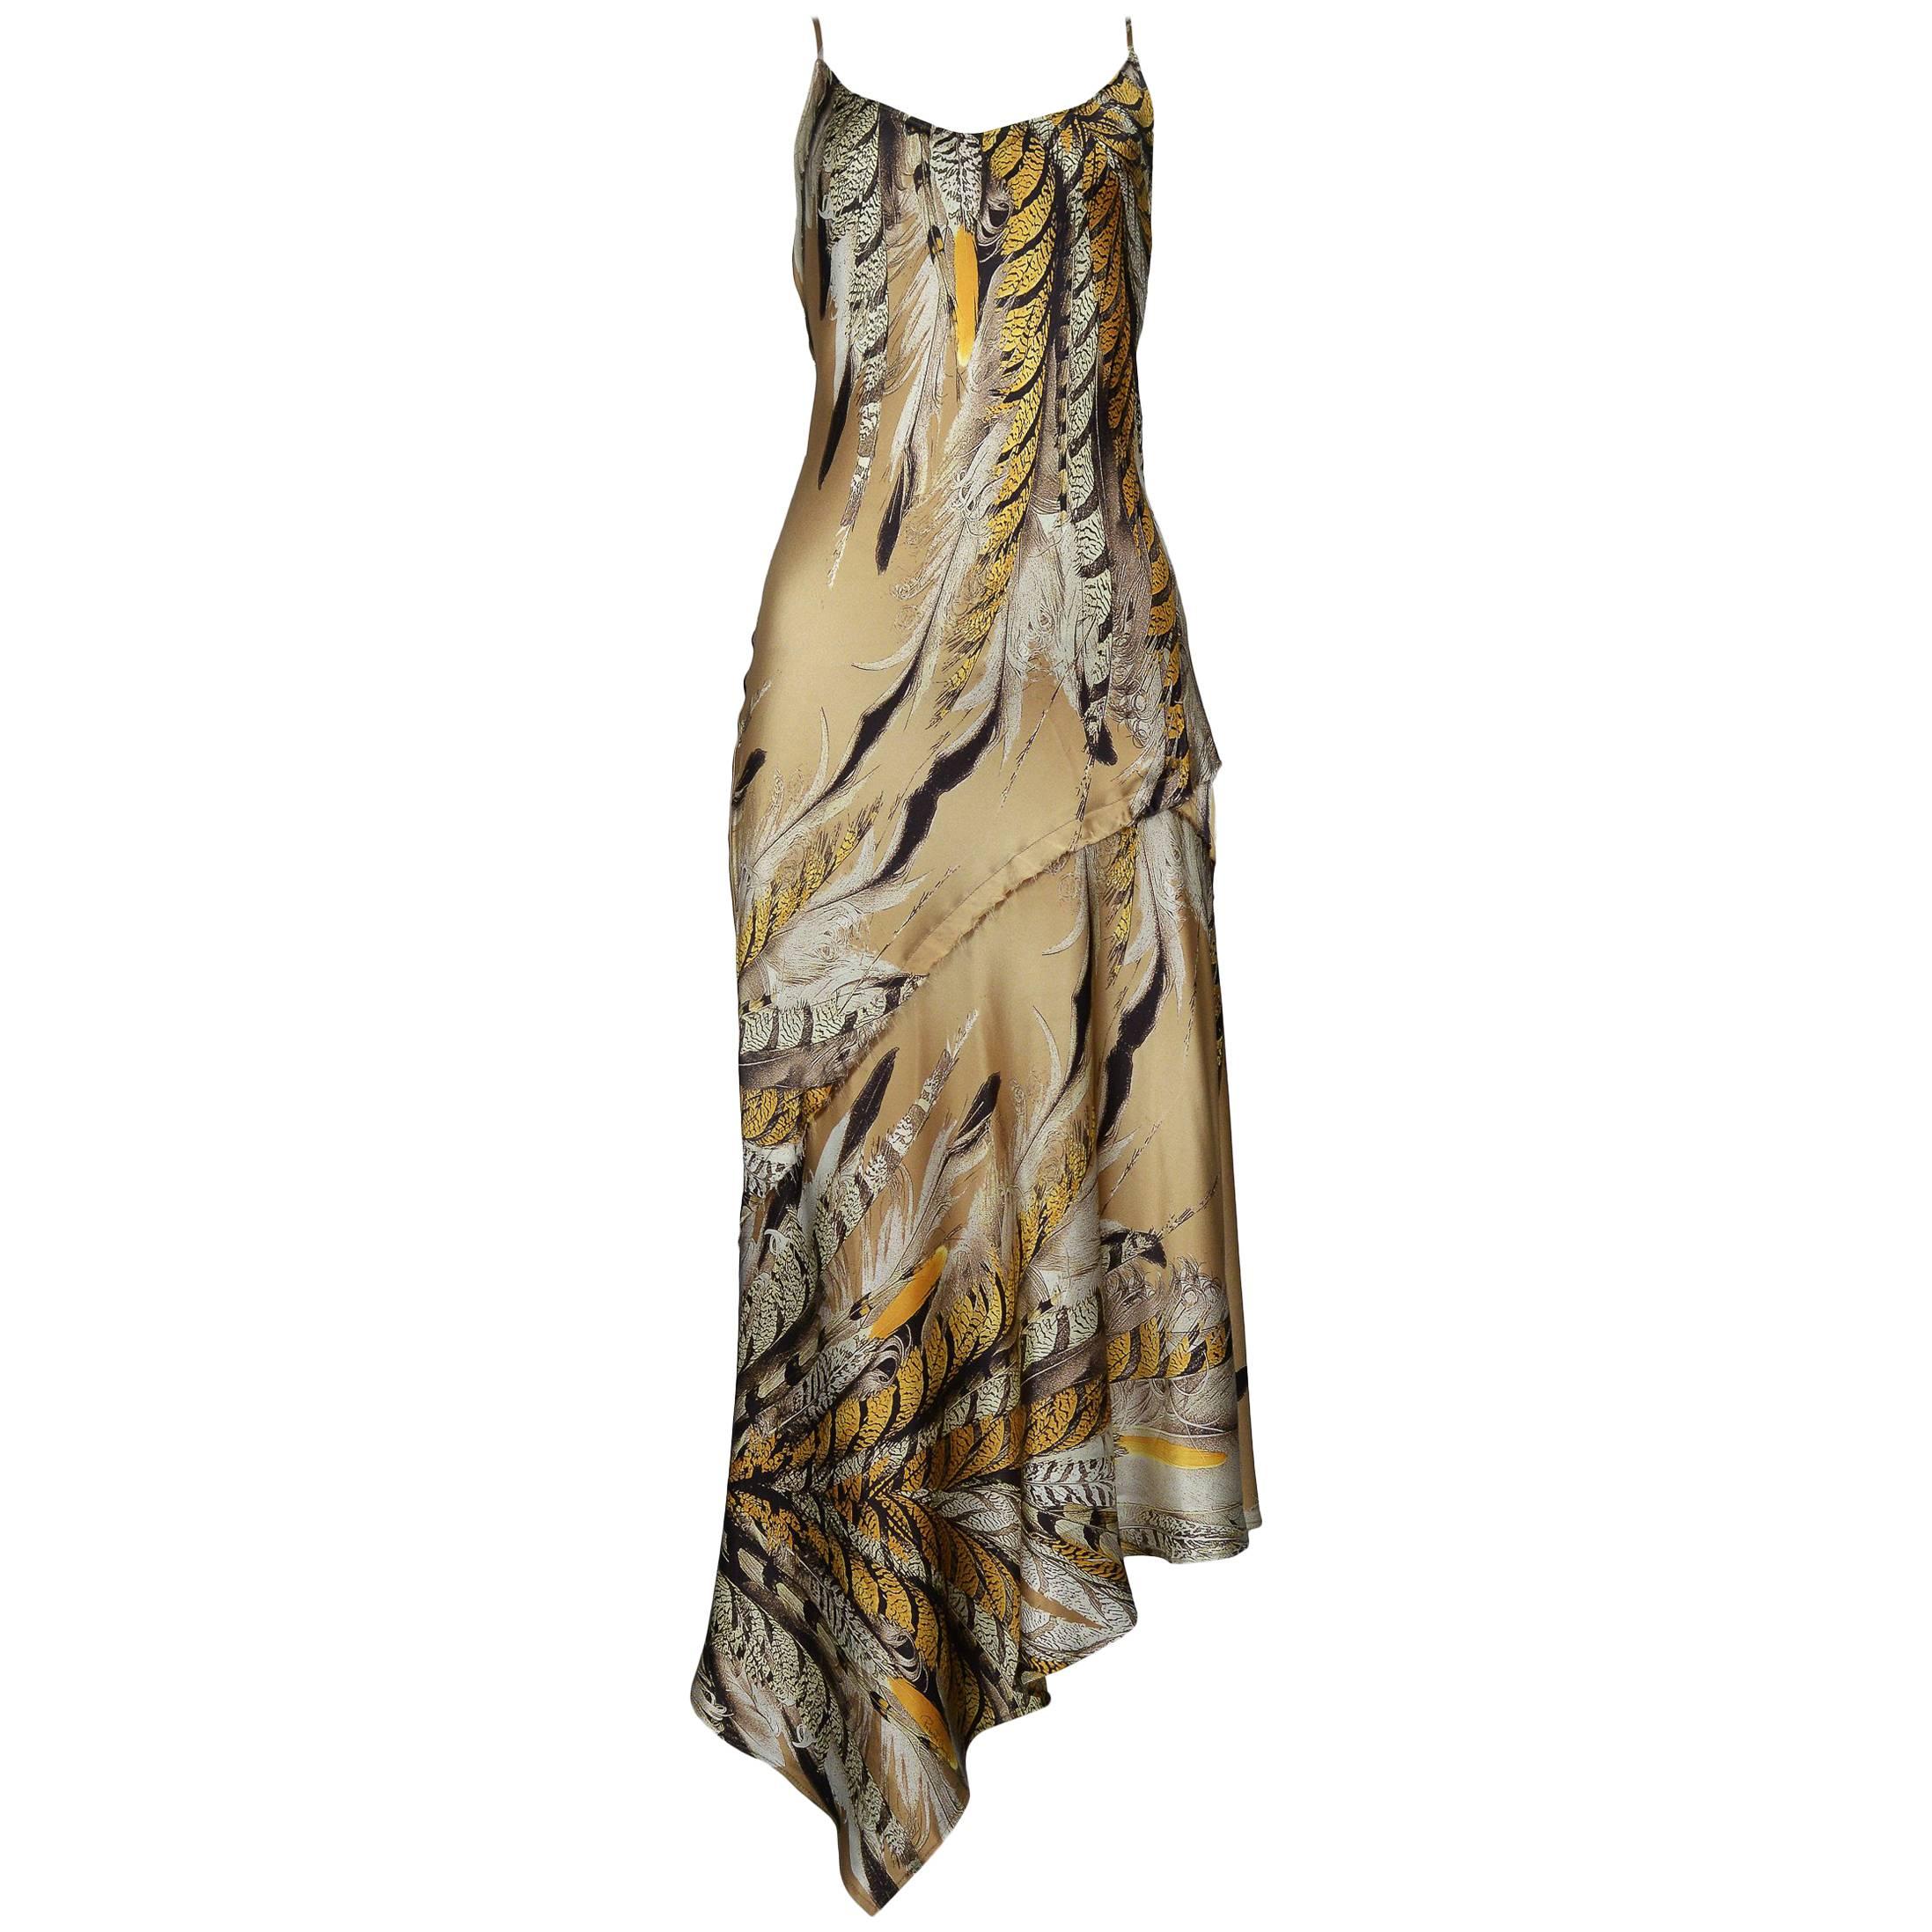 Roberto Cavalli Satin Feather Slip Dress With Open Cowl Back & Asymmetrical Hem